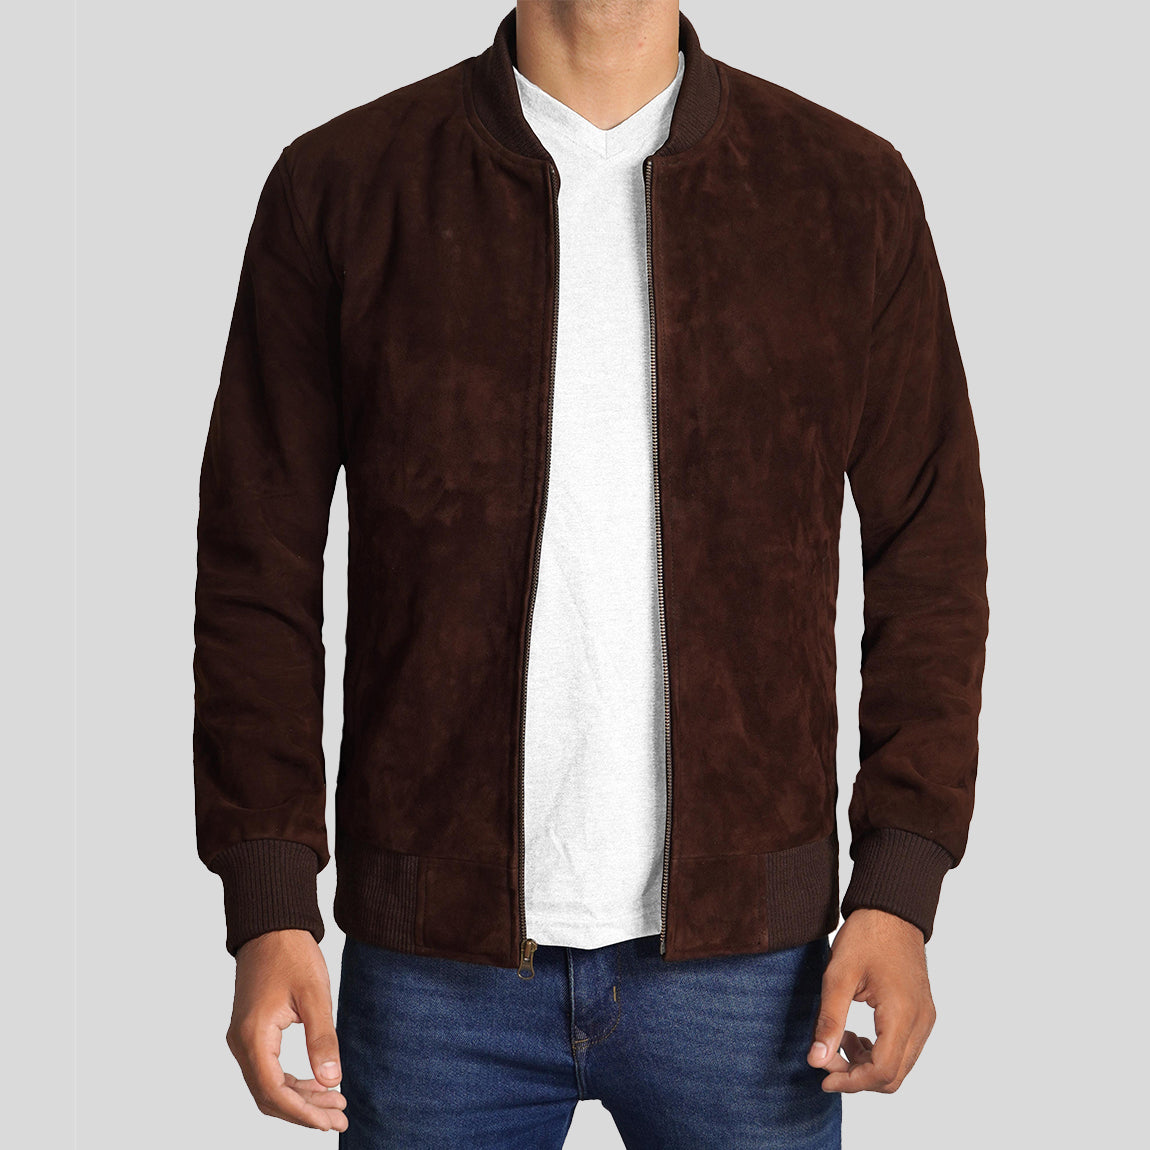 Men's Dark Brown Suede Leather Bomber Jacket - Classic